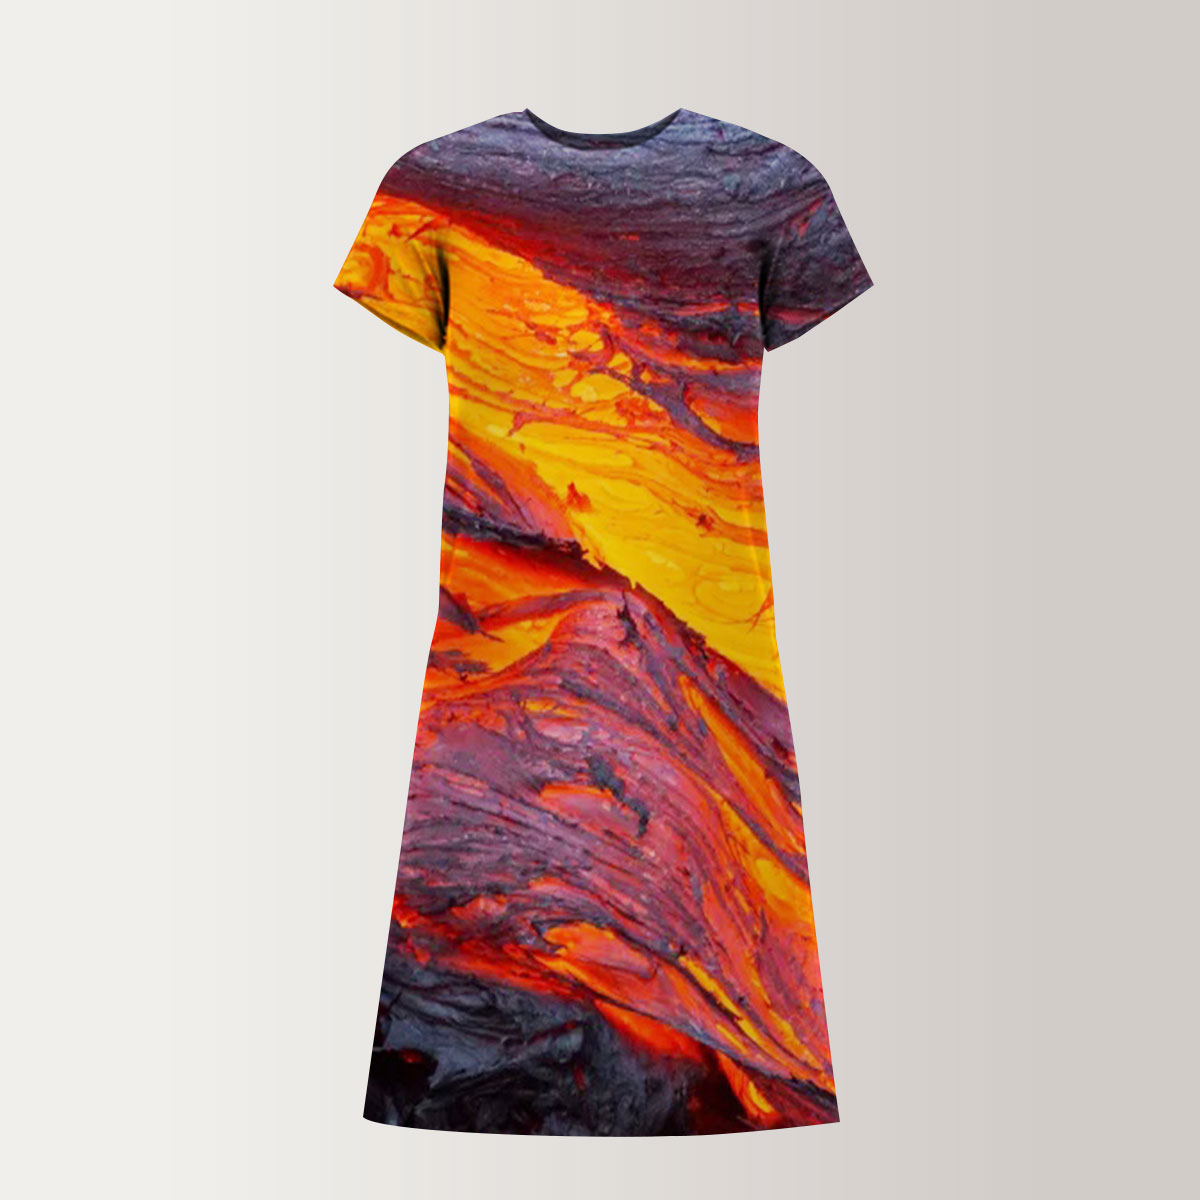 Volcano Mountain T-Shirt Dress